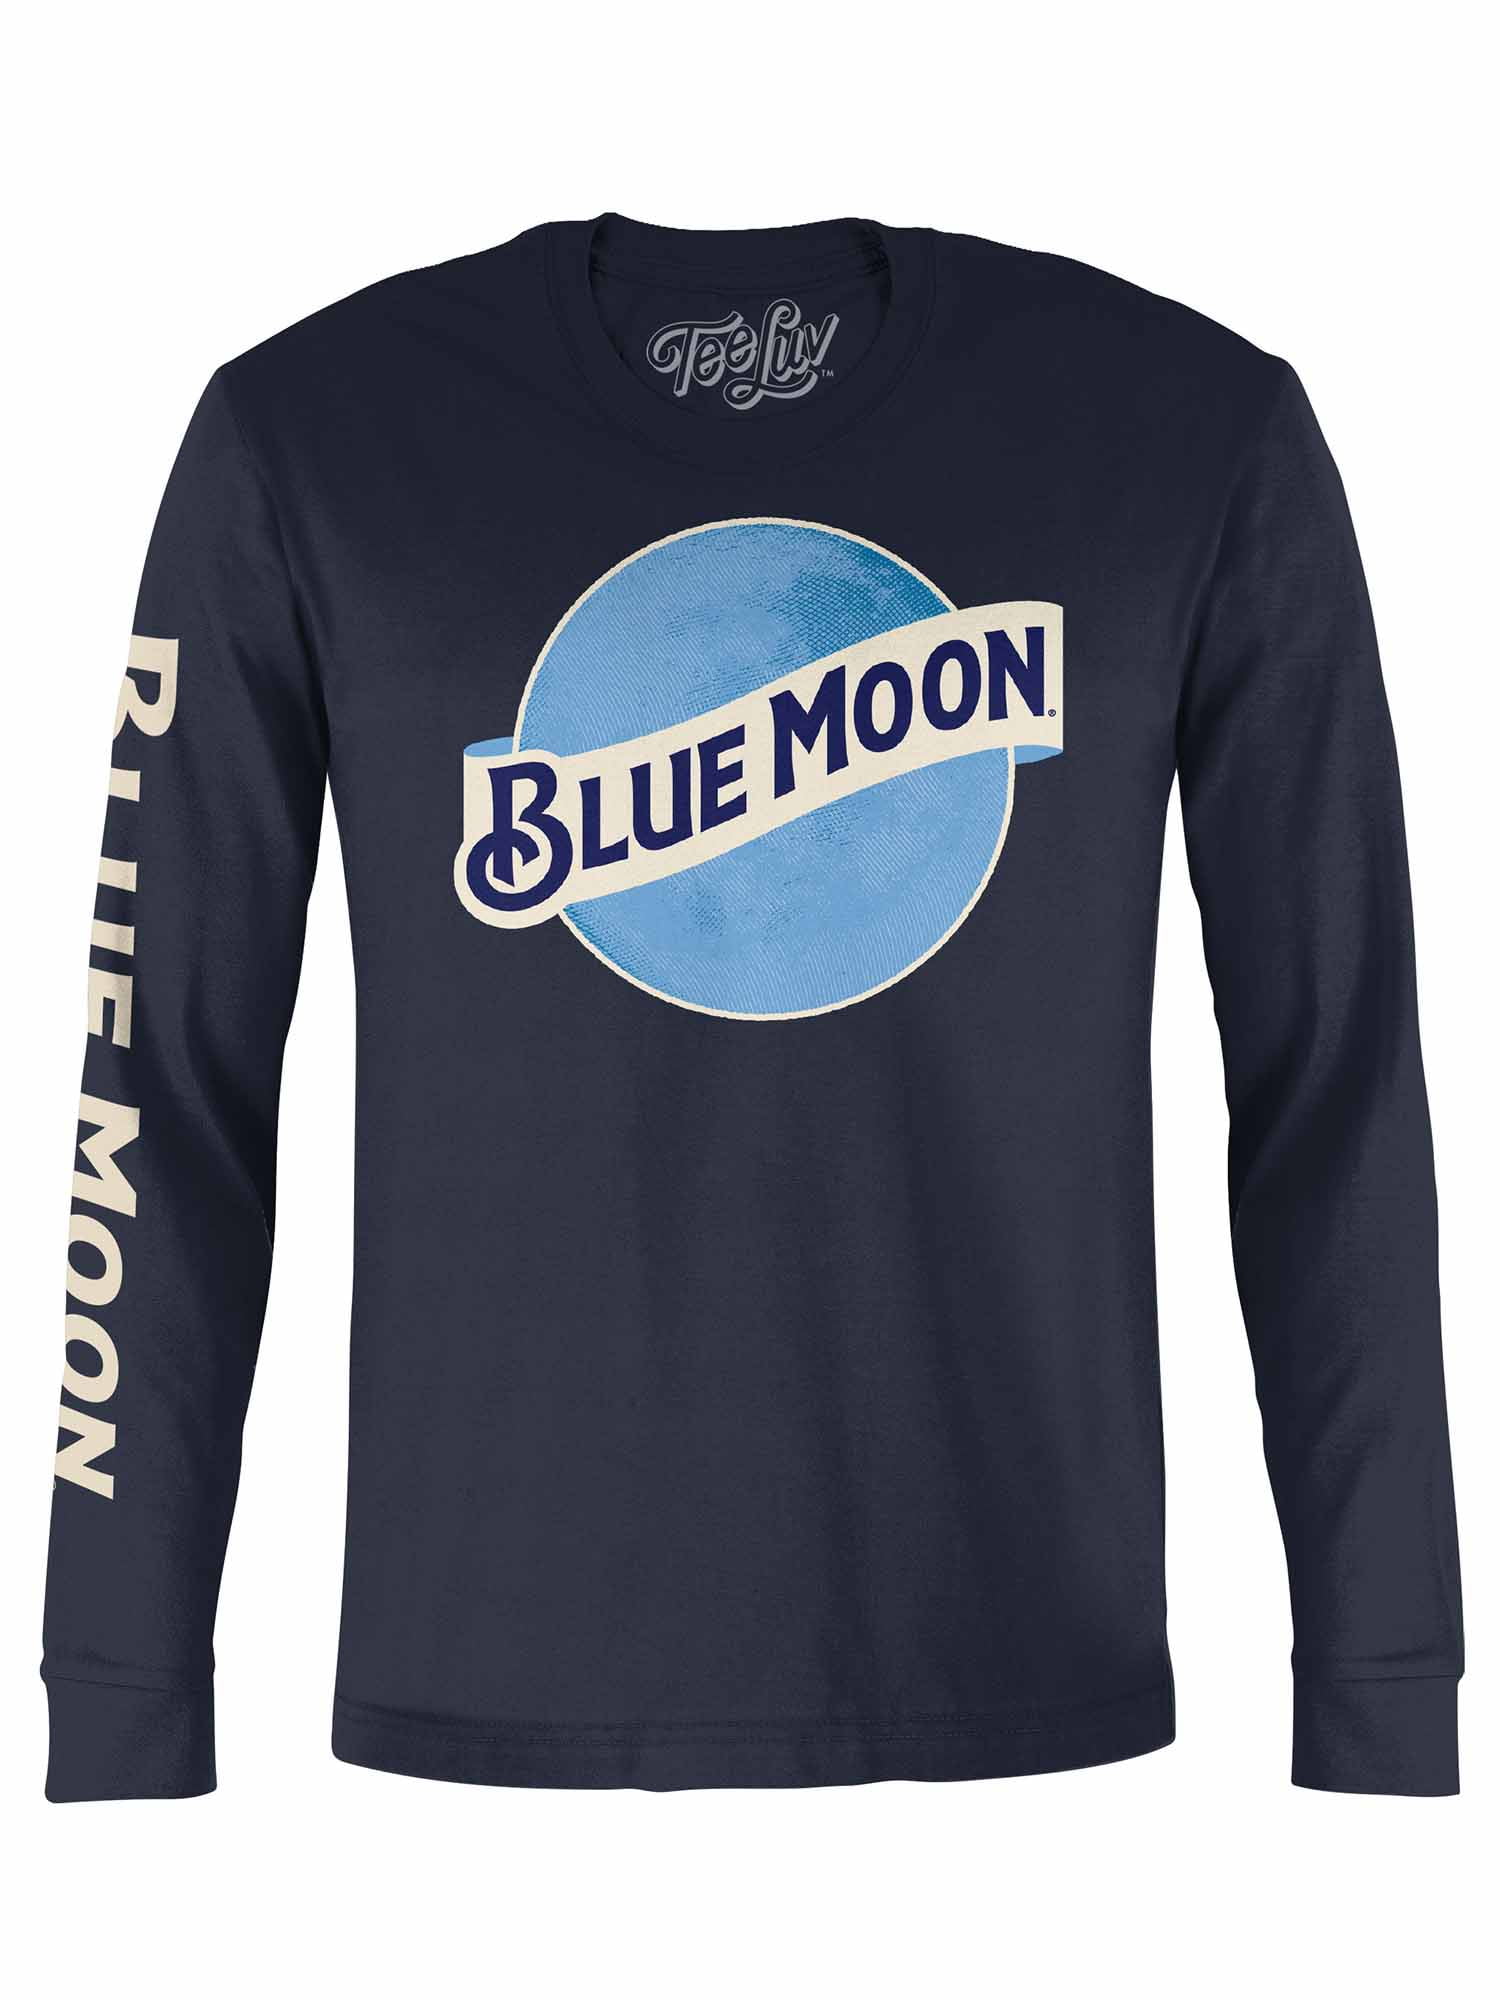 blue moon beer shirt